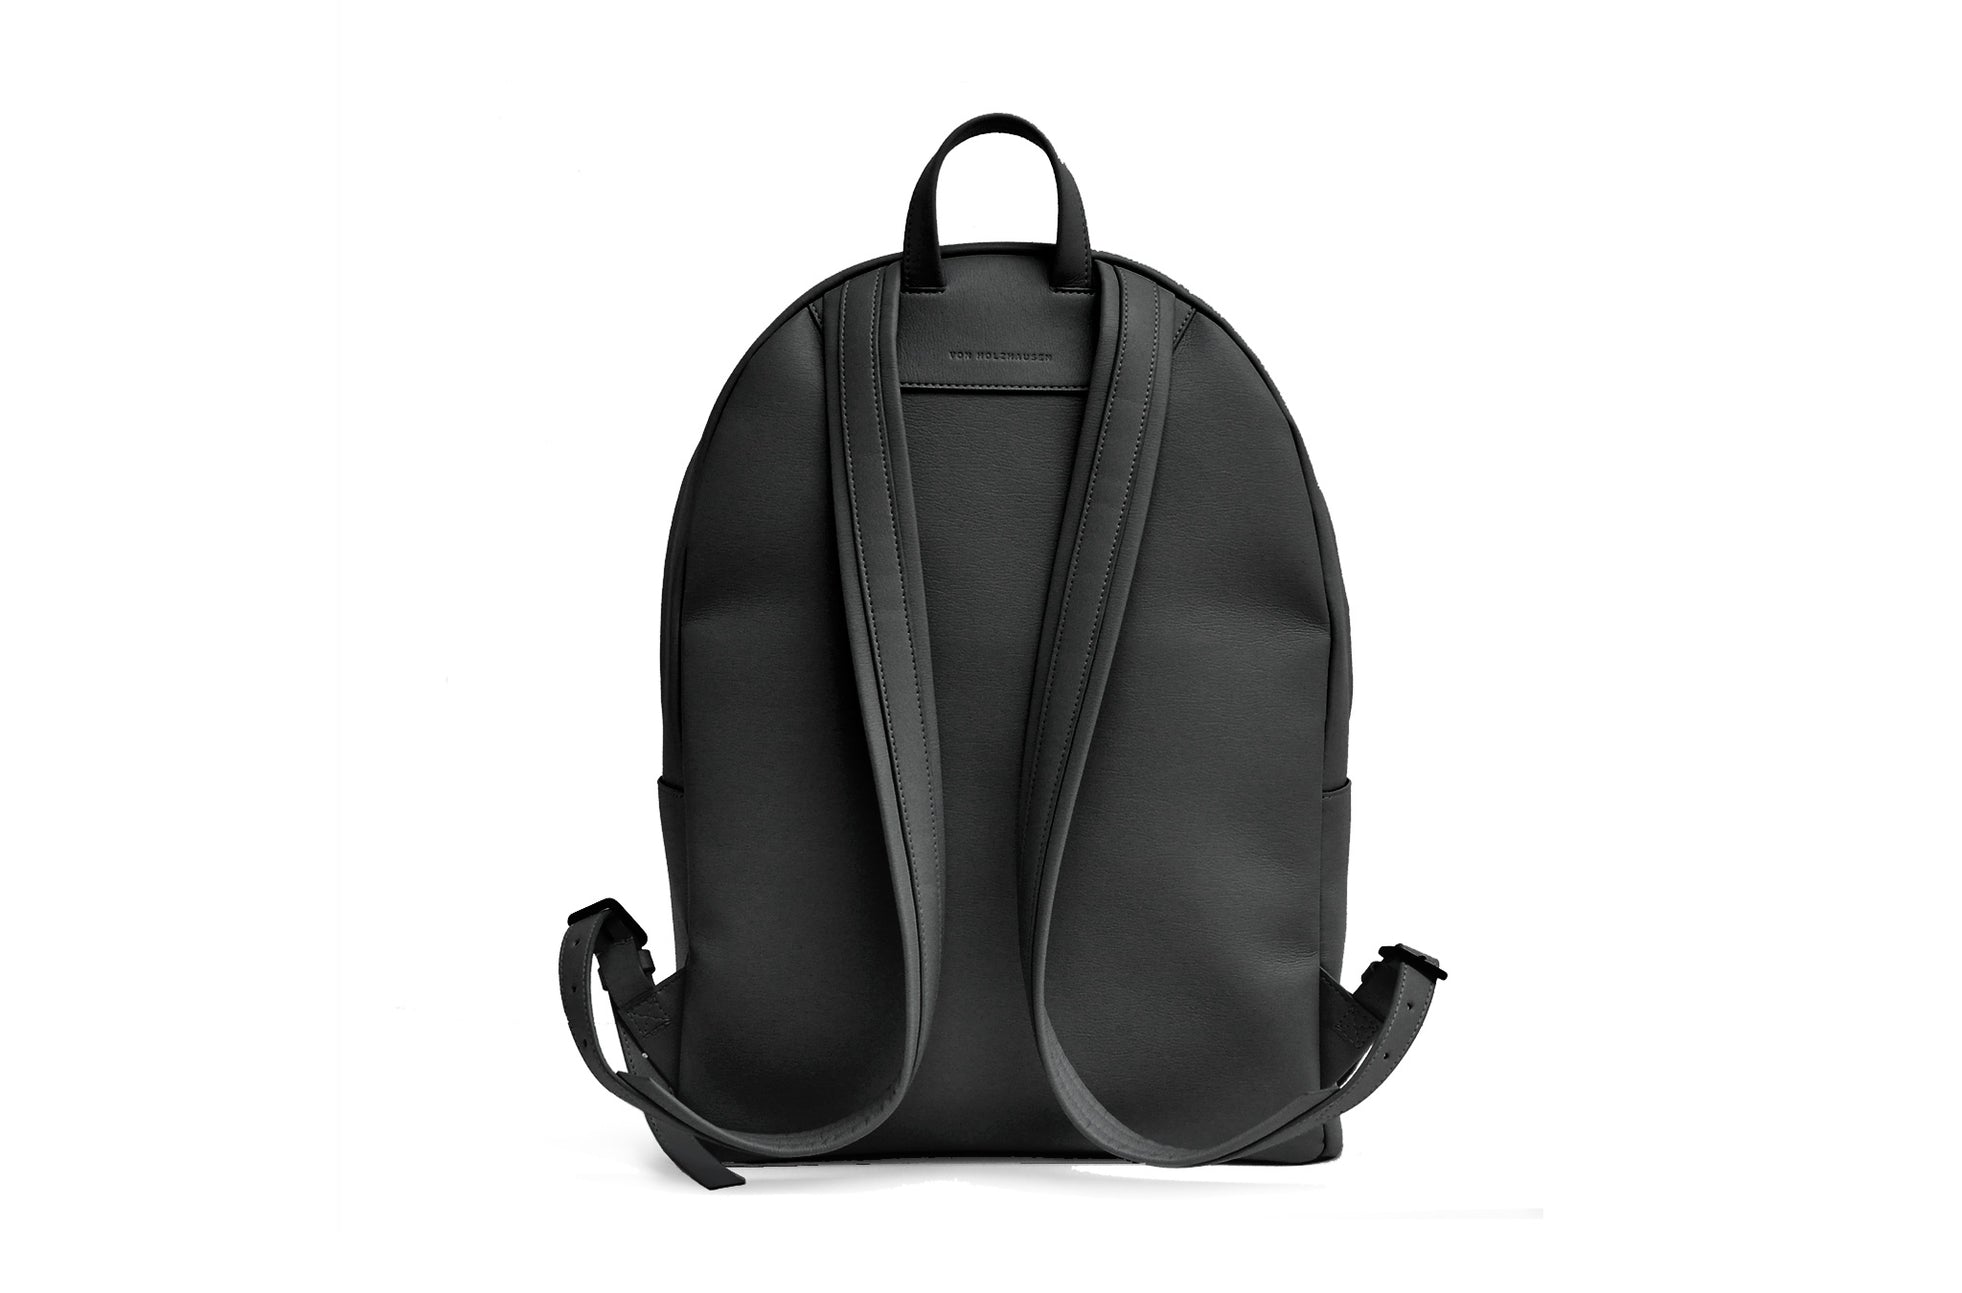 The Classic Backpack in Technik in Black image 4